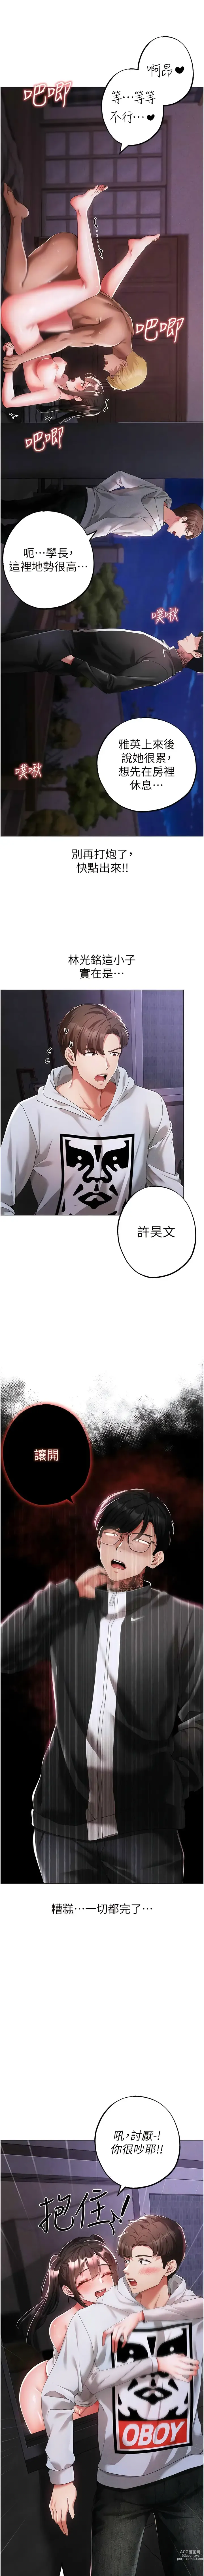 Page 675 of manga ↖㊣煞氣a猛男㊣↘ 1-37